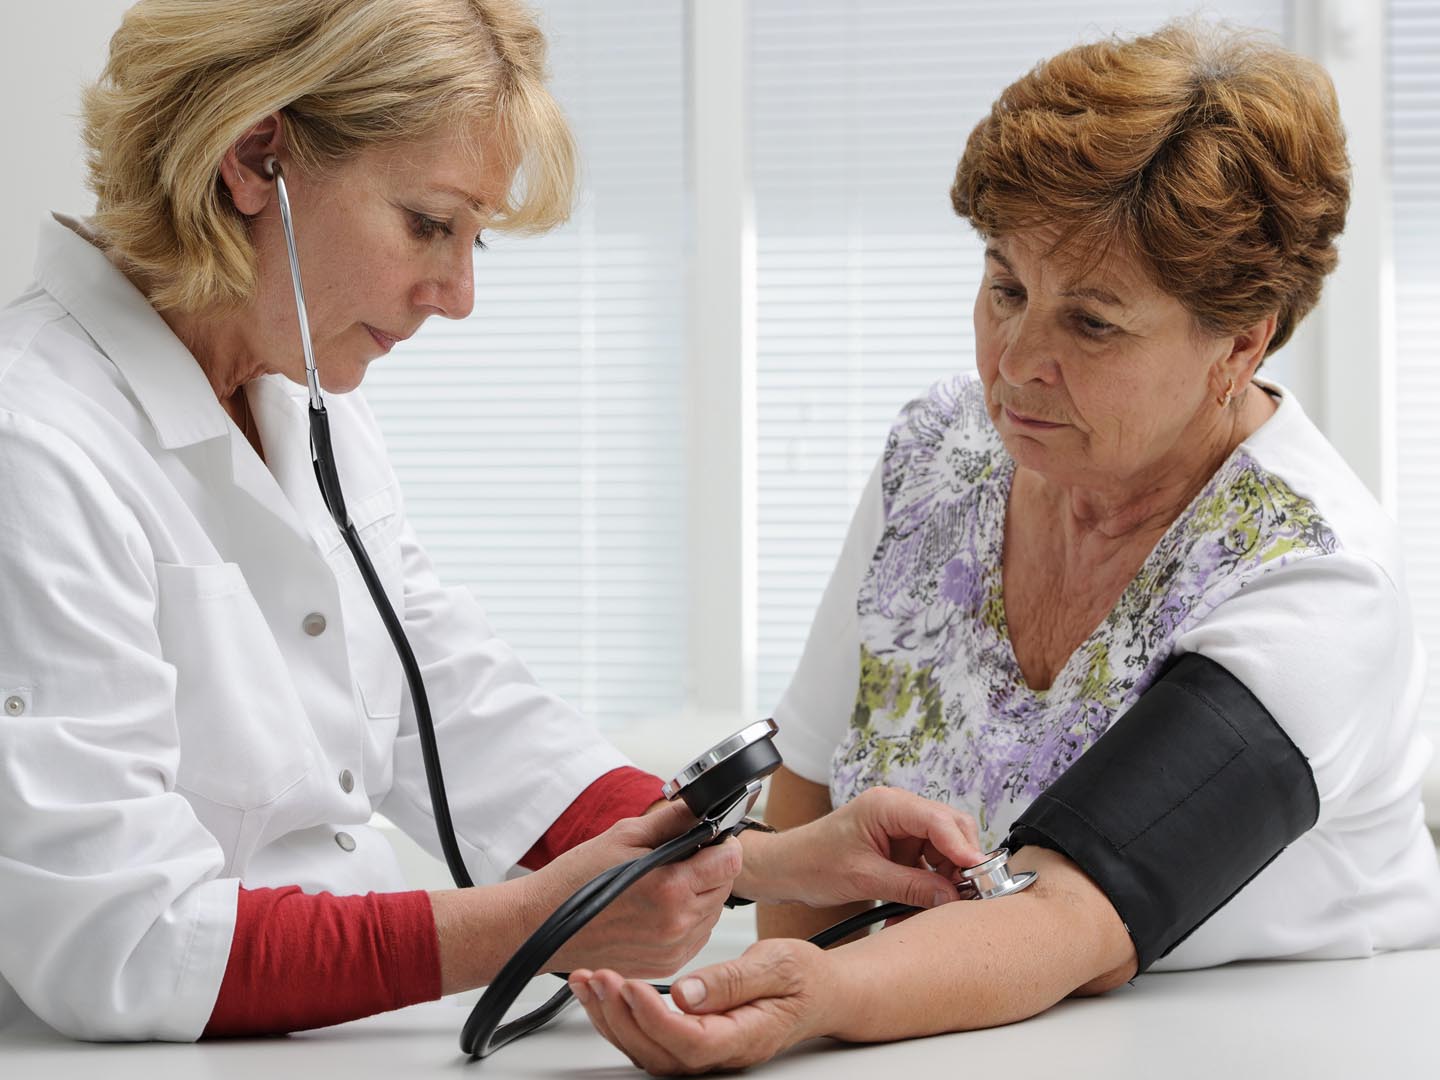 Doctor measuring blood pressure of female patient